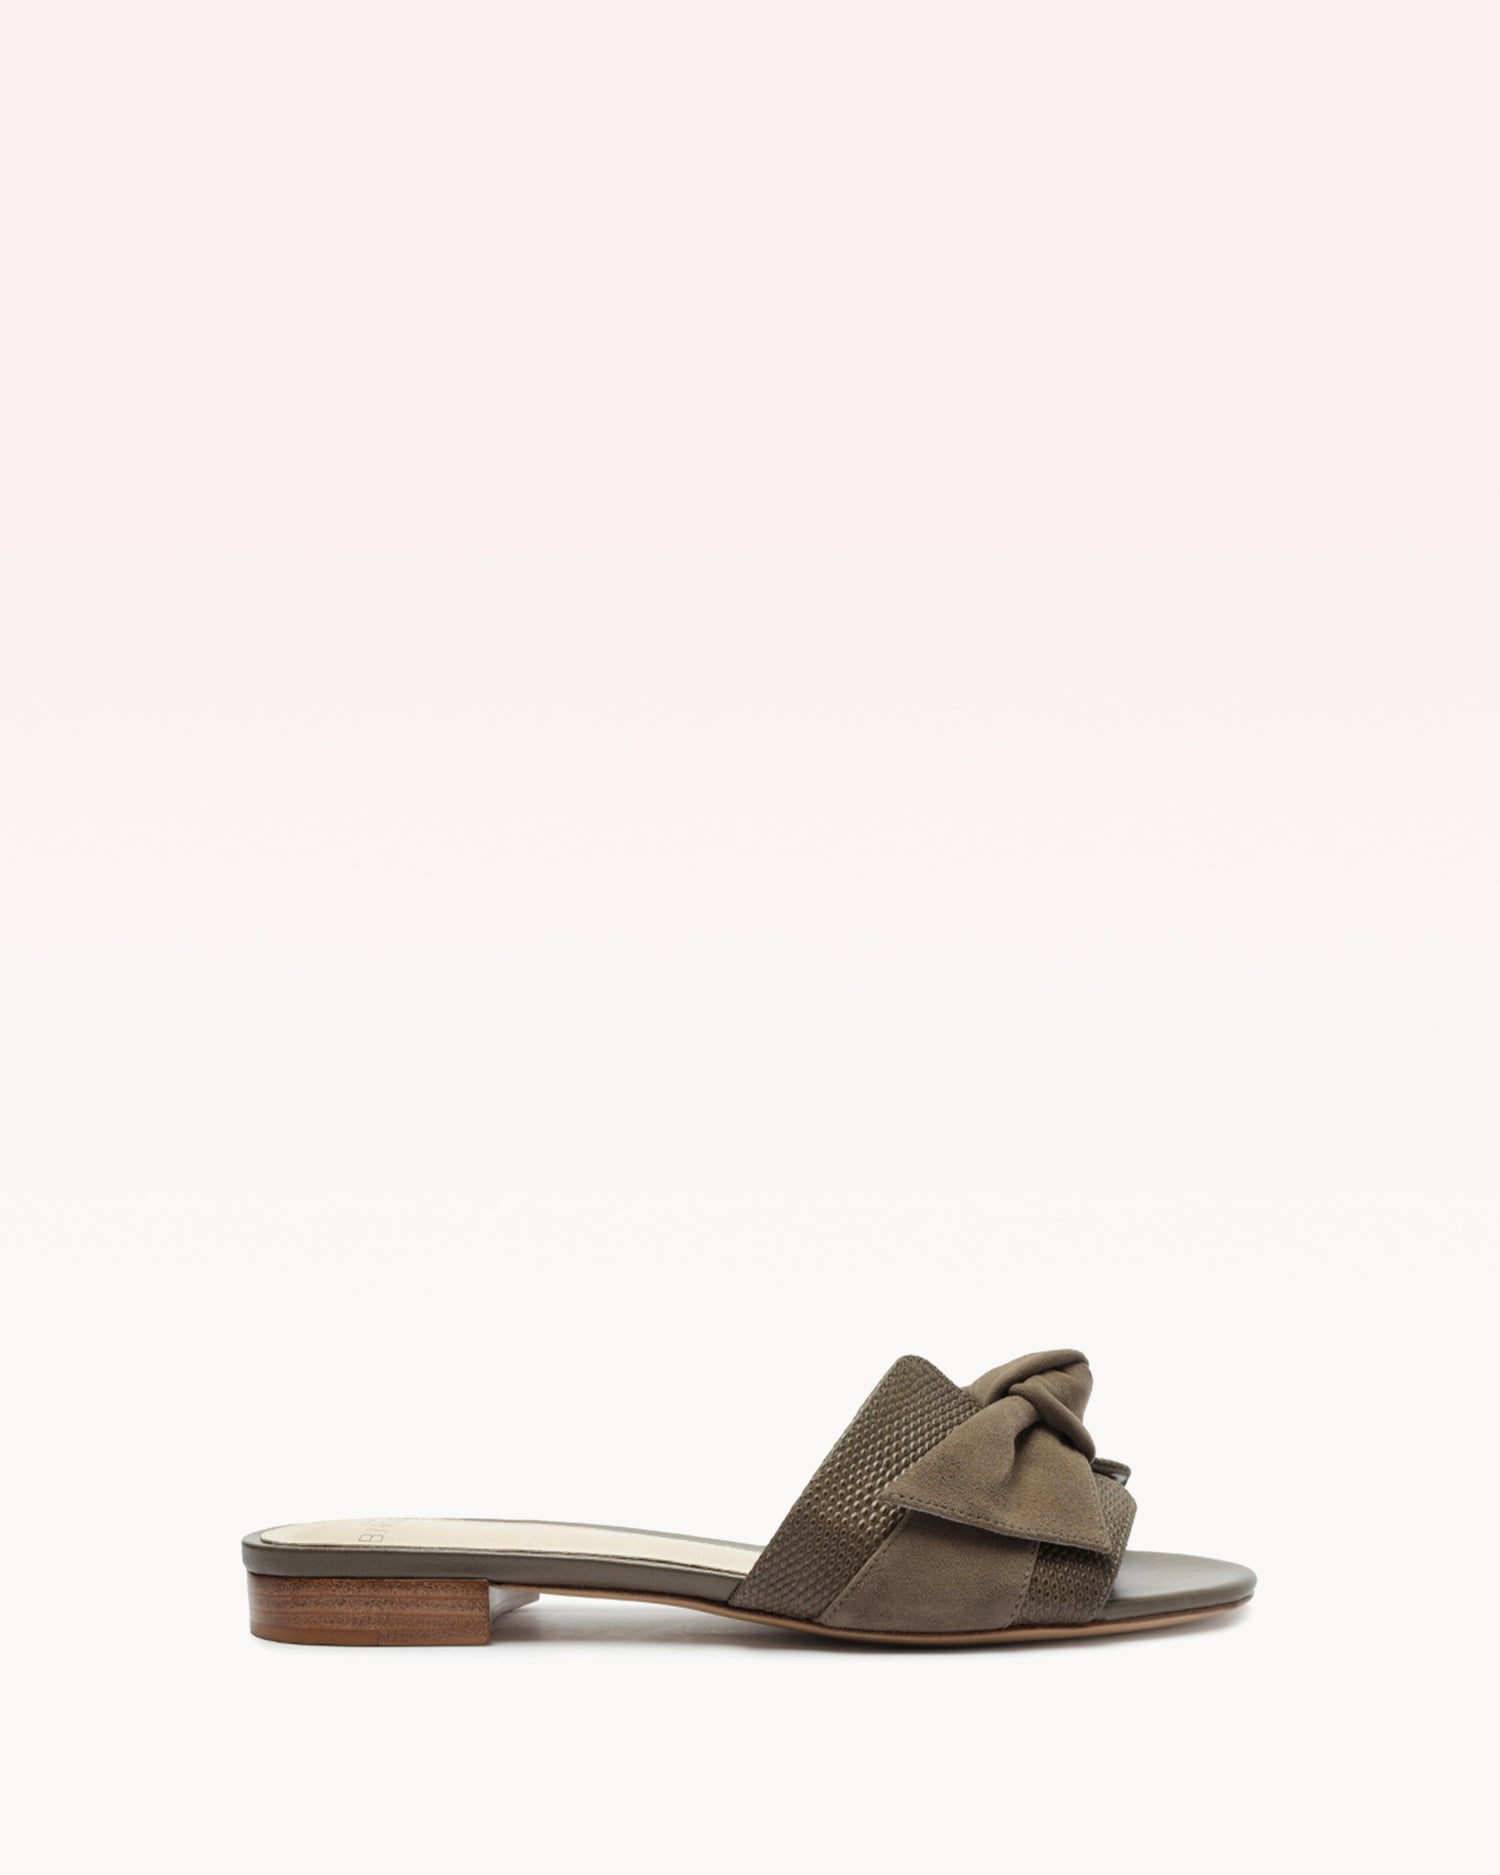 Maxi Clarita Flat Pebble Sandals R/24 35 Pebble Karung Embossed Leather/Suede